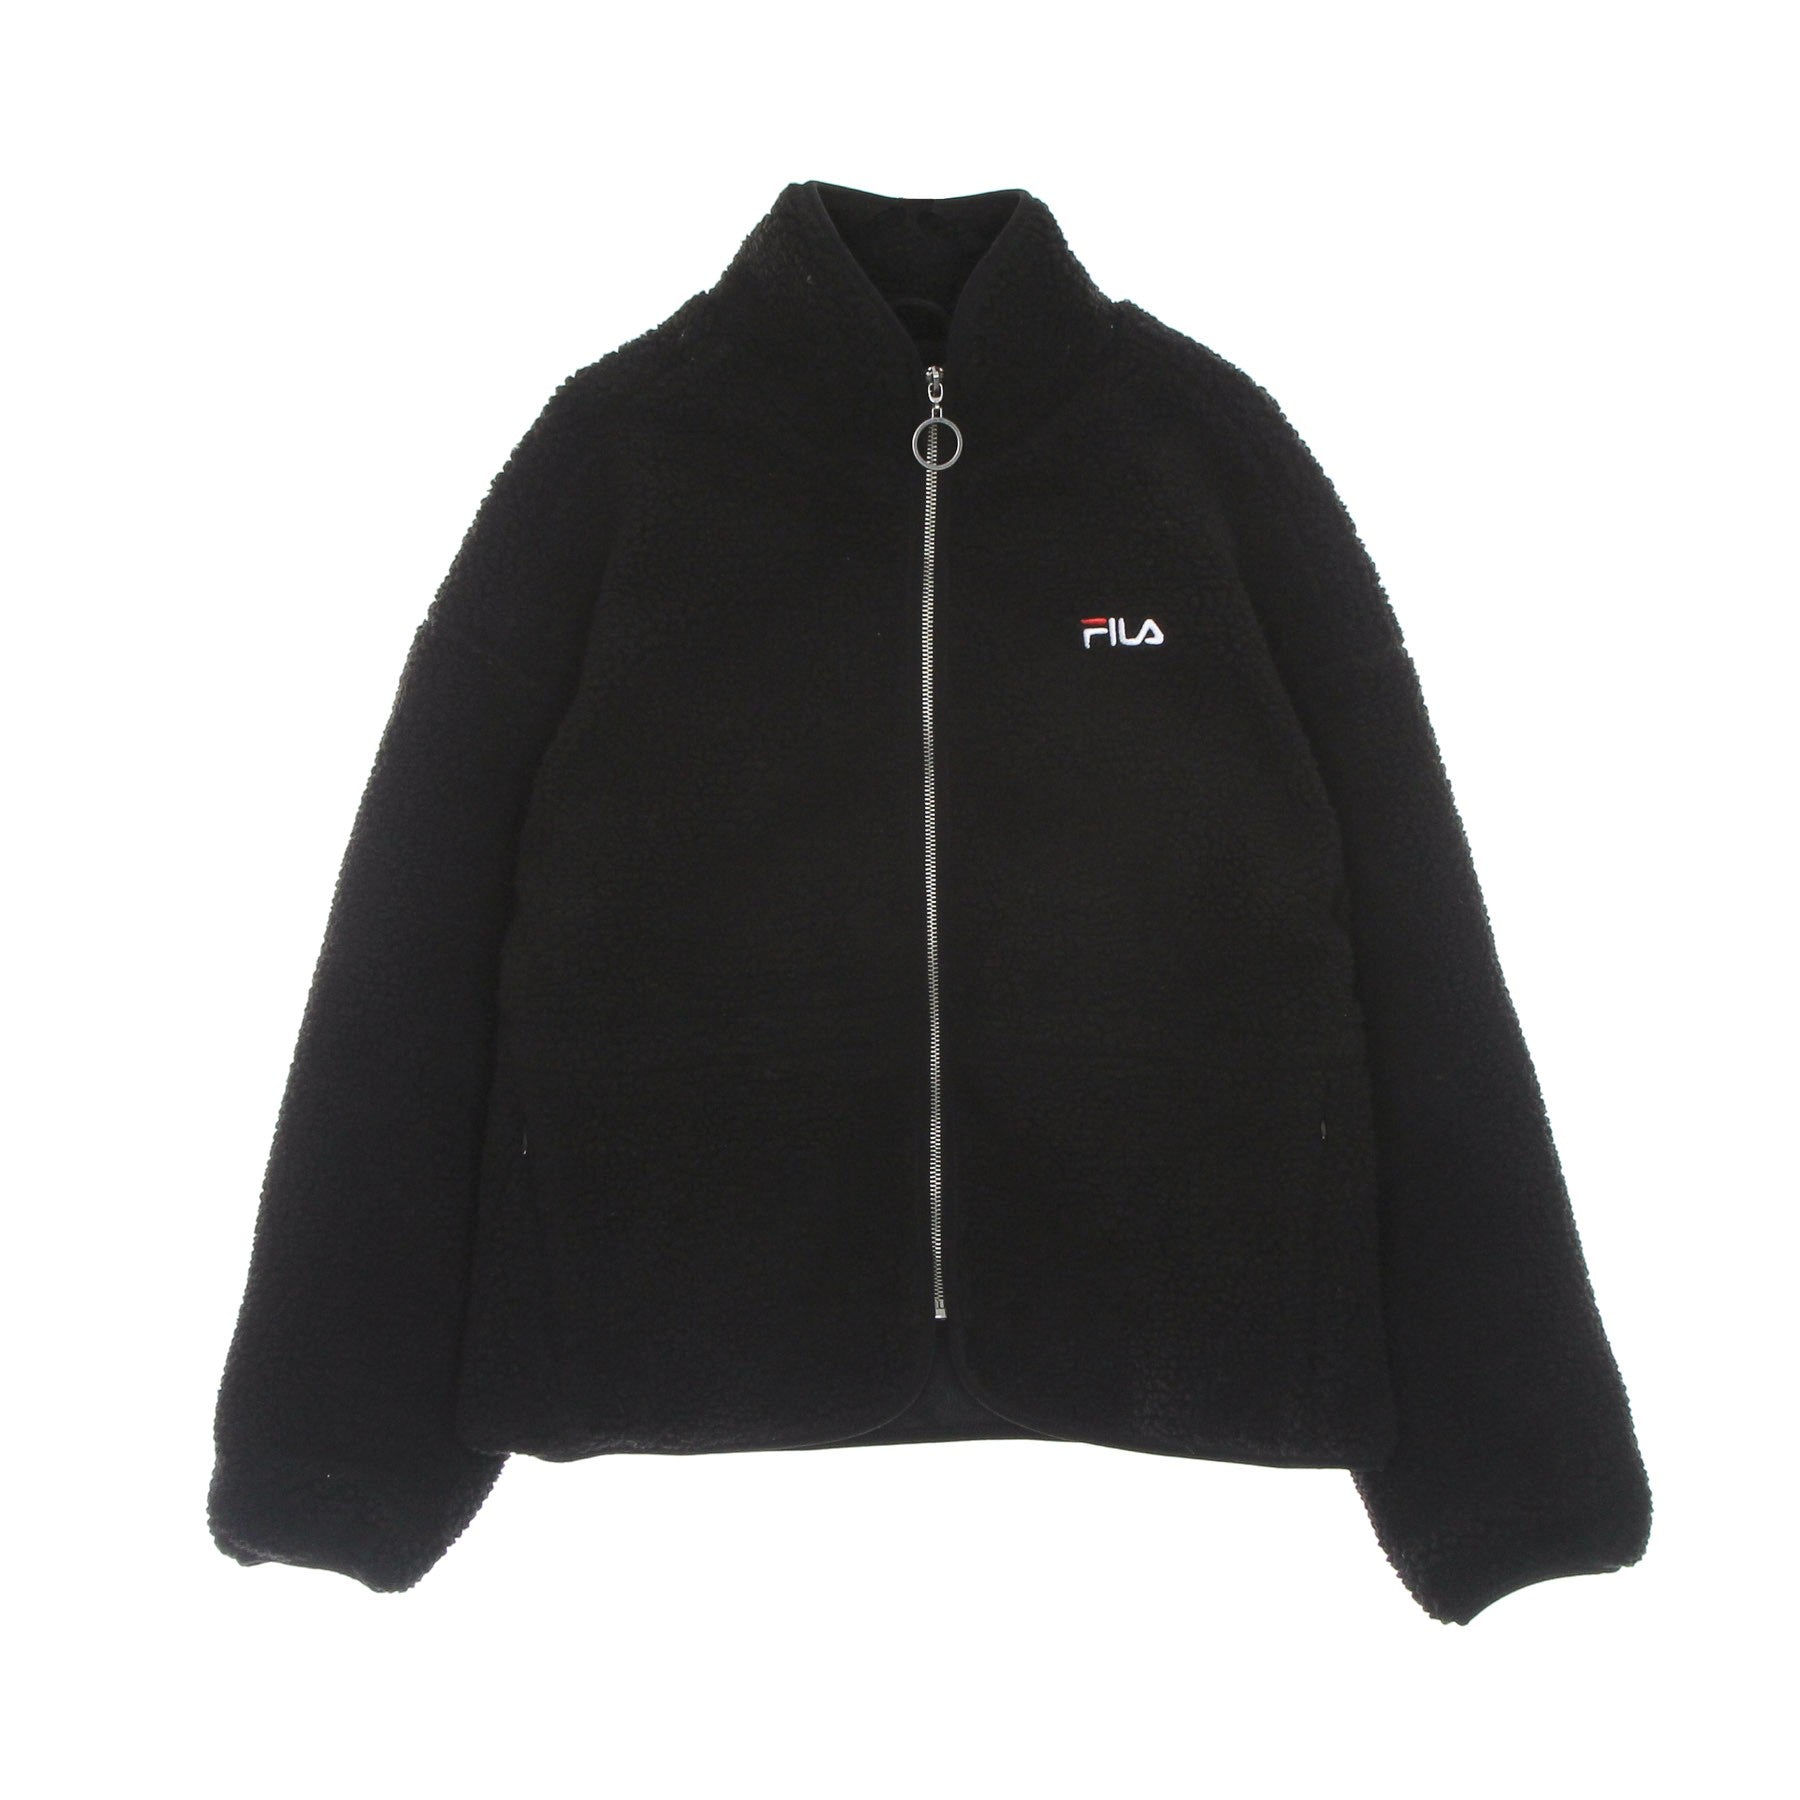 Fila, Orsetto Donna Sari Sherpa Fleece Jacket, Black